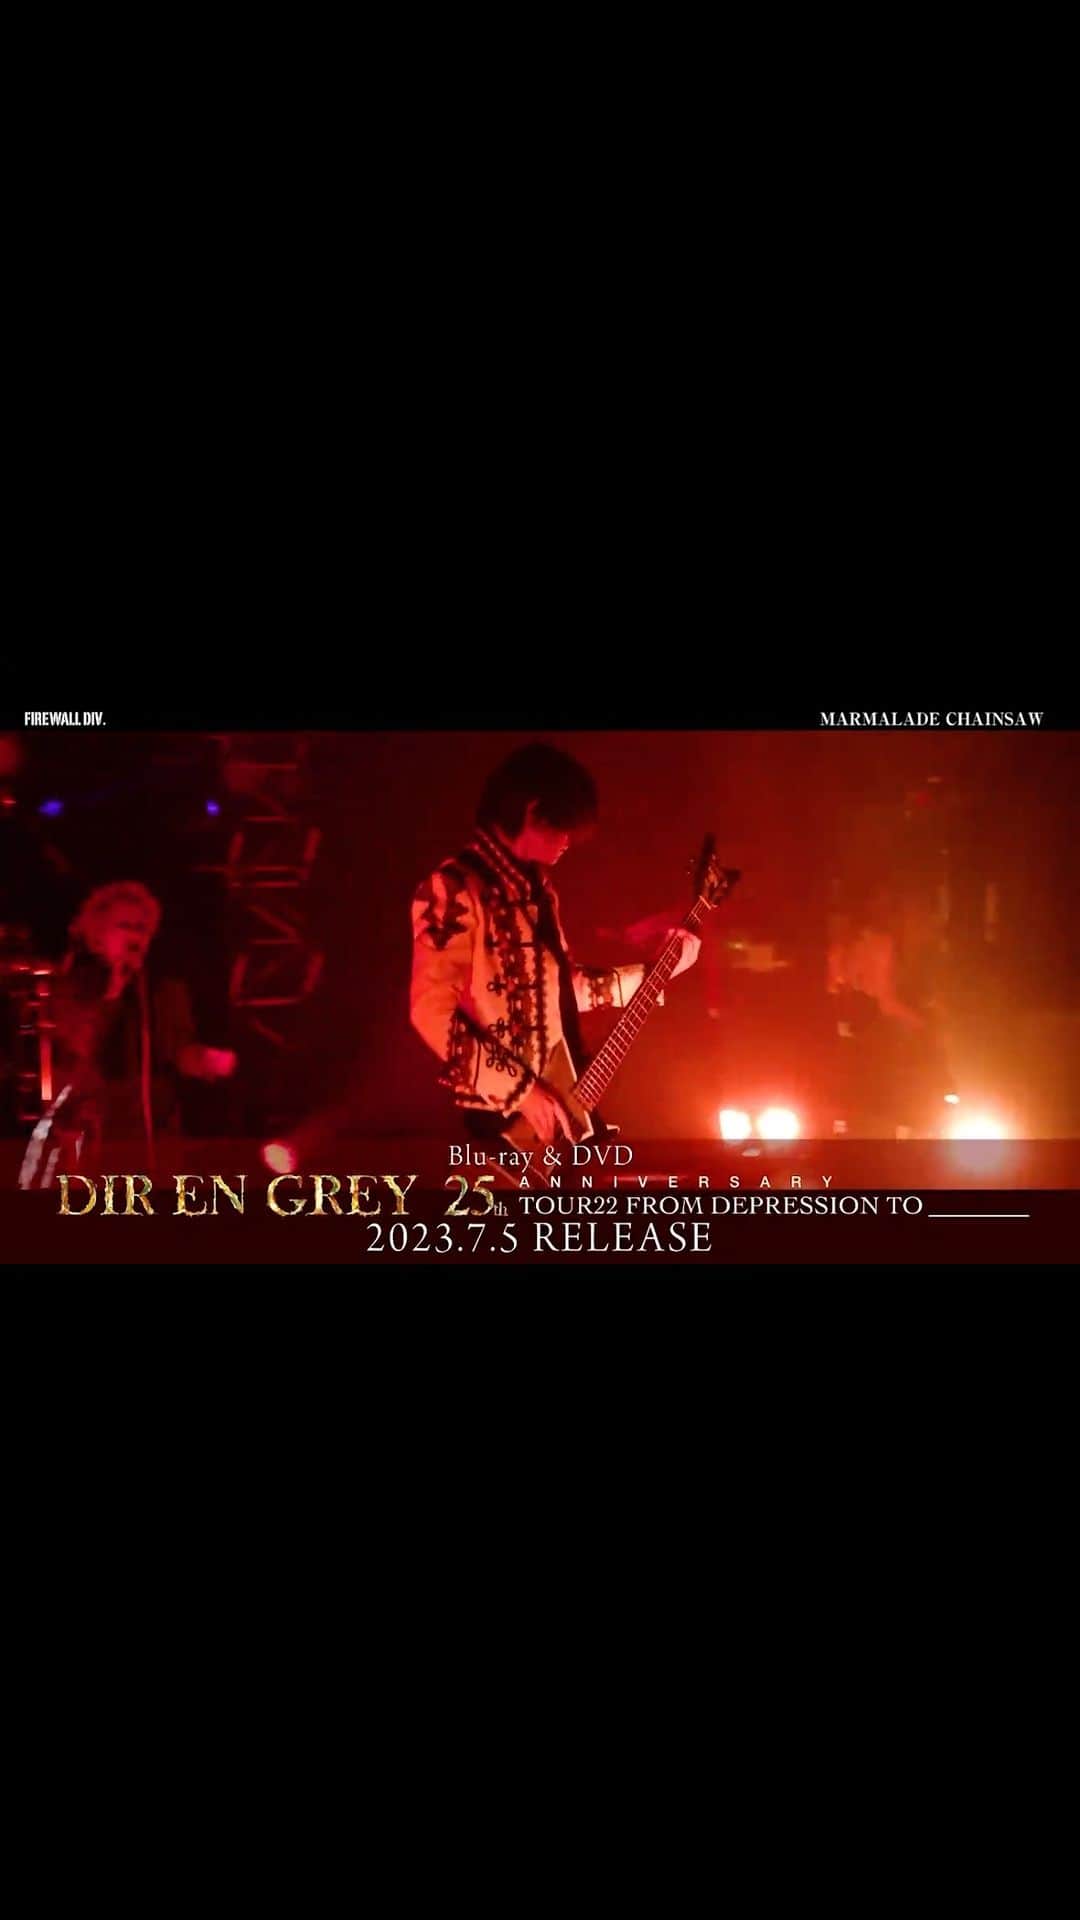 DIR EN GREYのインスタグラム：「NEW LIVE Blu-ray & DVD『25th Anniversary TOUR22 FROM DEPRESSION TO ________』(2023.7.5 RELEASE)トレーラー解禁！  NEW LIVE Blu-ray & DVD『25th Anniversary TOUR22 FROM DEPRESSION TO ________』(2023.7.5 RELEASE) trailer out now!  NEW LIVE Blu-ray & DVD『25th Anniversary TOUR22 FROM DEPRESSION TO ________』のトレーラーが解禁となりました。  DIR EN GREY LIVE Blu-ray & DVD 『25th Anniversary TOUR22 FROM DEPRESSION TO ________』 2023.7.5 RELEASE  【初回生産限定盤】 【First Press Limited Ver.】 2枚組(2Blu-ray) SFXD-0025～26 ￥8,800 (tax in) 2枚組(2DVD) SFBD-0078～79 ￥7,700 (tax in)    DISC 1 25th Anniversary TOUR22 FROM DEPRESSION TO ________ 2022.11.08-09 Zepp Haneda 01. MARMALADE CHAINSAW 02. THE ⅢD EMPIRE 03. C 04. DRAIN AWAY 05. Ash 06. T.D.F.F. 07. 理由 (WAKE) 08. OBSCURE 09. The Perfume of Sins 10. 朧 (Oboro) 11. 13 12. ain’t afraid to die 13. Machiavellism 14. 孤独に死す、故に孤独。 (KODOKU NI SHISU, YUENI KODOKU.) 15. Merciless Cult 16. 朔-saku- 17. CHILD PREY 18. G.D.S. 19. Schweinの椅子 (Schwein No Isu) 20. 鼓動 (KODOU) 21. 【KR】cube 22. JESSICA 23. THE FINAL 24. 激しさと、この胸の中で絡み付いた灼熱の闇 (Hageshisa To, Kono Mune No Naka De Karamitsuita Shakunetsu No Yami) 25. 羅刹国 (RASETSUKOKU)   DISC 2 25th Anniversary TOUR22 FROM DEPRESSION TO ________ -｢a knot｣LIMITED EXTRA- 2022.12.16 SHINJUKU BLAZE 01. G.D.S. 02. 朔-saku- 03. C 04. 鼓動 (KODOU) 05. 激しさと、この胸の中で絡み付いた灼熱の闇 (Hageshisa To, Kono Mune No Naka De Karamitsuita Shakunetsu No Yami) 06. 羅刹国 (RASETSUKOKU)  【通常盤】 【Regular Version】 1枚組(Blu-ray) SFXD-0027 ￥6,600 (tax in)   DISC 1 25th Anniversary TOUR22 FROM DEPRESSION TO ________ 2022.11.08-09 Zepp Haneda 01. MARMALADE CHAINSAW 02. THE ⅢD EMPIRE 03. C 04. DRAIN AWAY 05. Ash 06. T.D.F.F. 07. 理由 (WAKE) 08. The Perfume of Sins 09. ain’t afraid to die 10. Machiavellism 11. 朔-saku- 12. CHILD PREY 13. G.D.S. 14. Schweinの椅子 (Schwein No Isu) 15. 鼓動 (KODOU) 16. 【KR】cube 17. JESSICA 18. THE FINAL 19. 激しさと、この胸の中で絡み付いた灼熱の闇 (Hageshisa To, Kono Mune No Naka De Karamitsuita Shakunetsu No Yami) 20. 羅刹国 (RASETSUKOKU)  Manufactured by FIREWALL DIV. Distributed by Sony Music Solutions Inc.  ※収録内容及び仕様等は変更になる可能性がございます。 ※Contents, title and versions are subject to change without notice.」